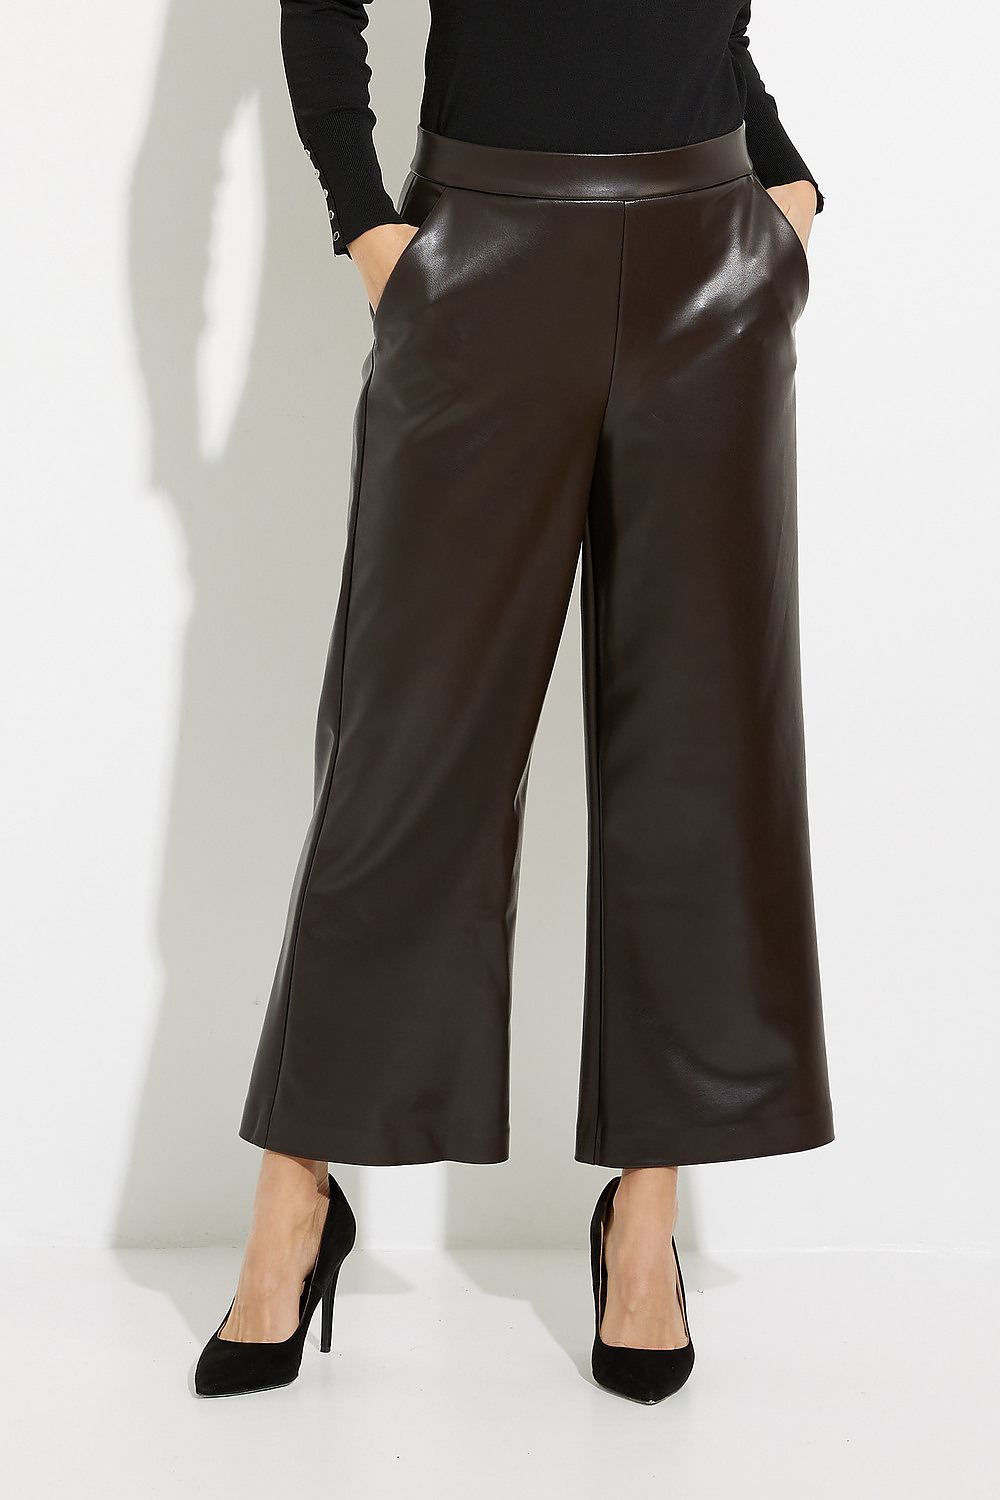 Joseph Ribkoff Faux Leather Flared Pants Style 224016. Mocha